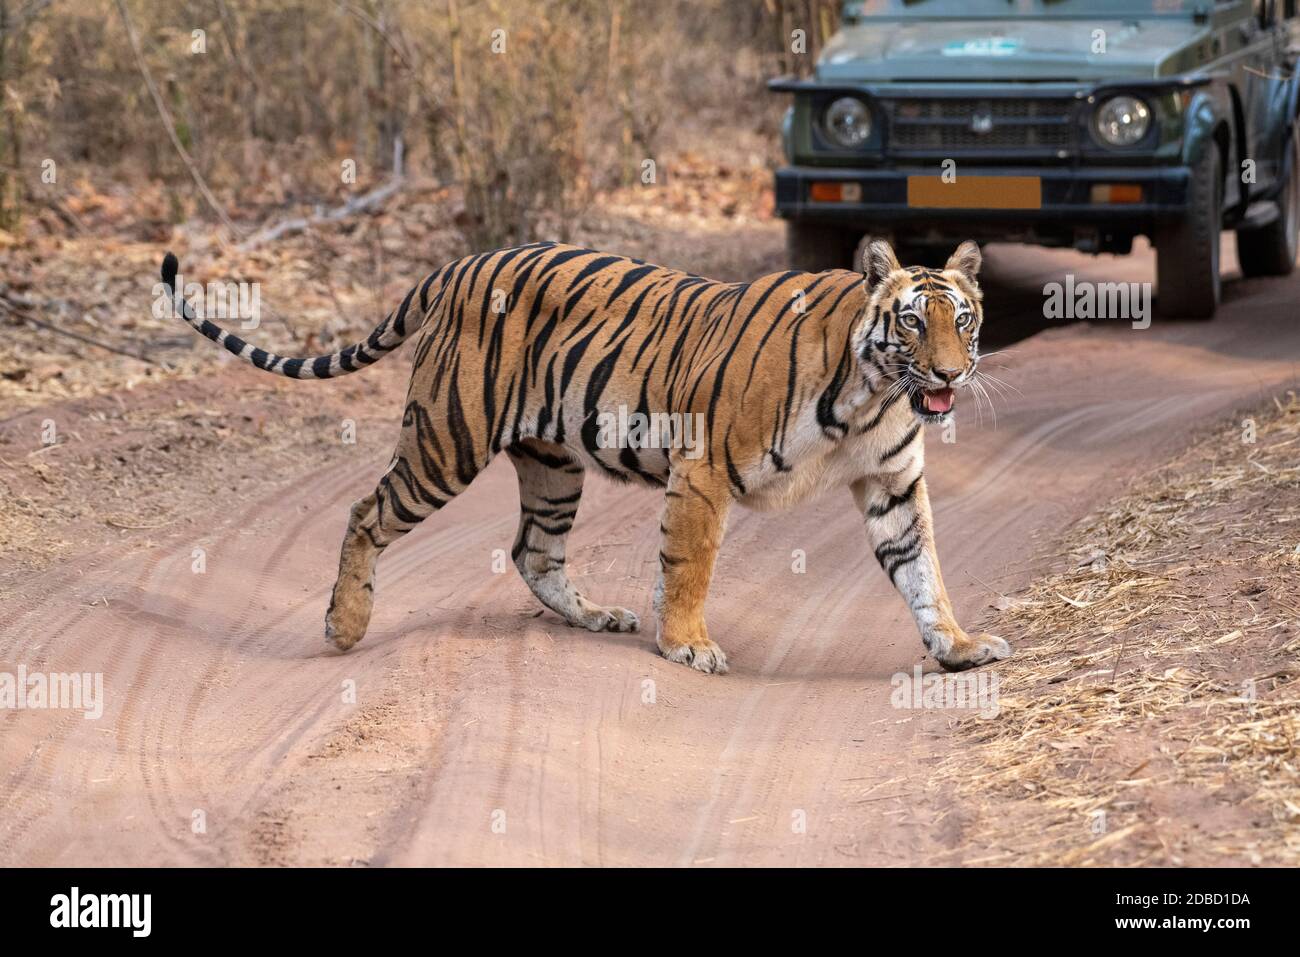 Tiger crossing road with tourist jeep in background, Bandhavgarh, Madhya Pradesh, India Stock Photo